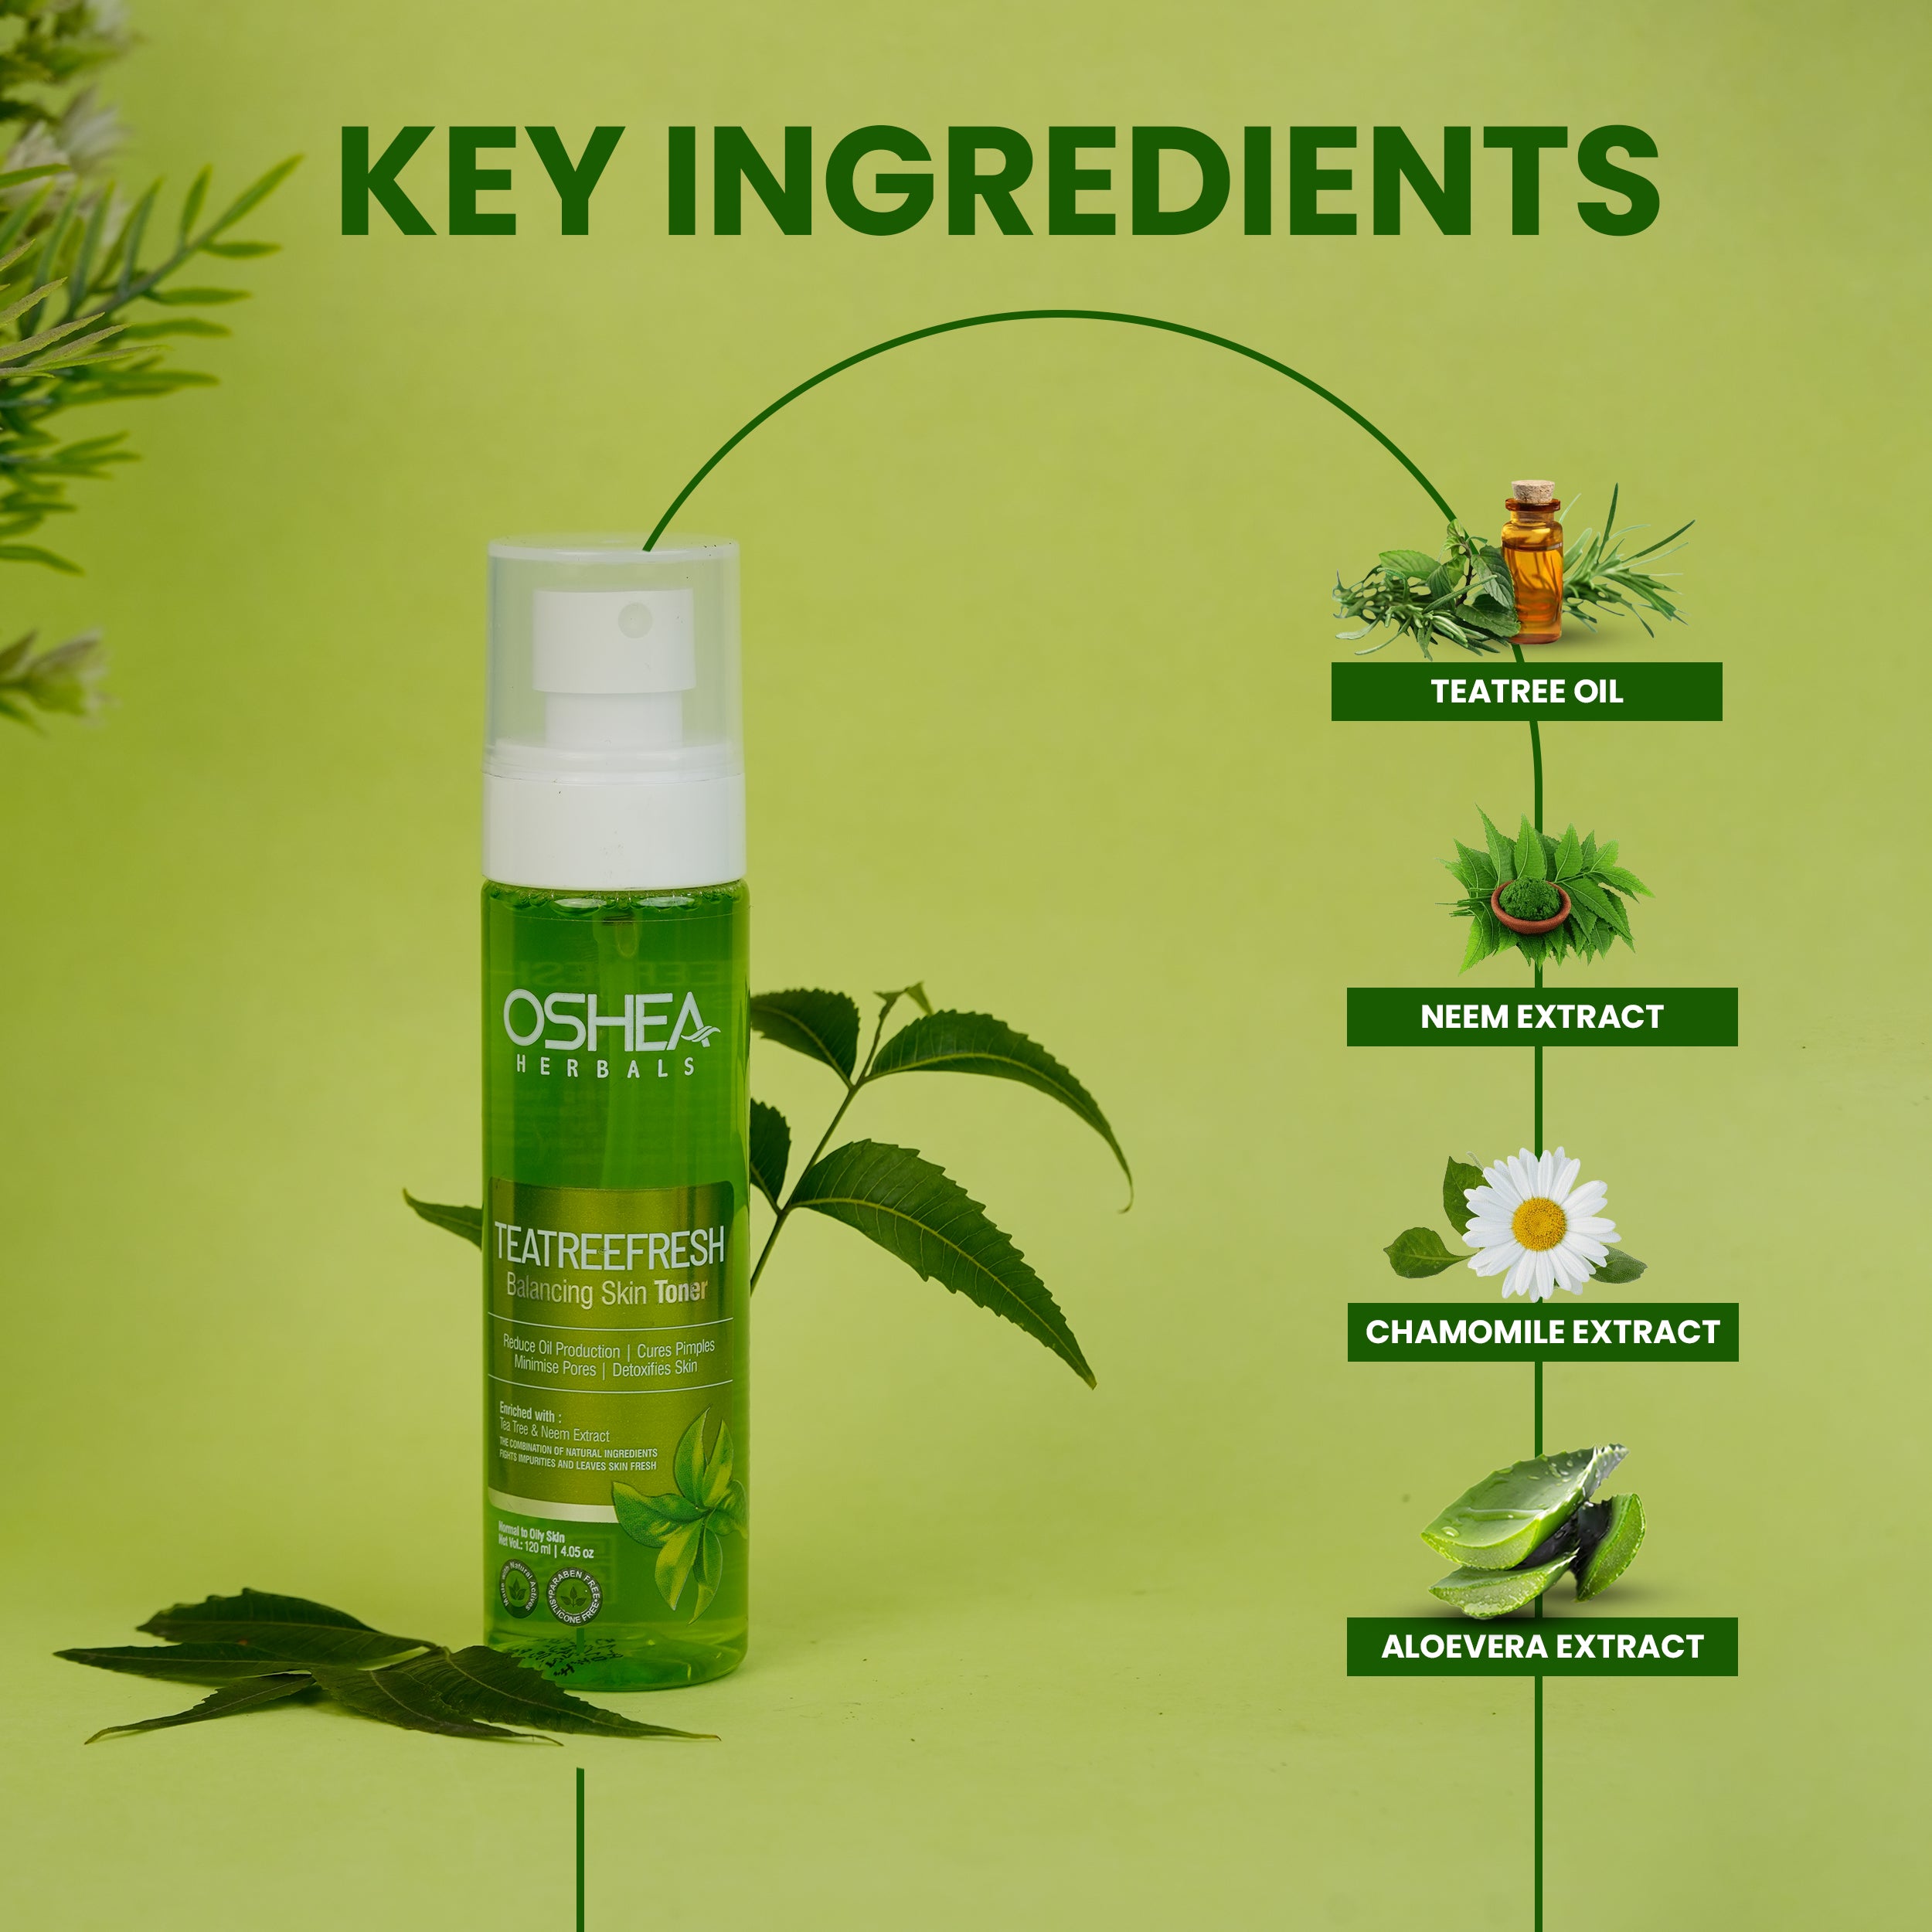 Key ingredients Teatree Fresh Balancing Skin Toner Oshea Herbals